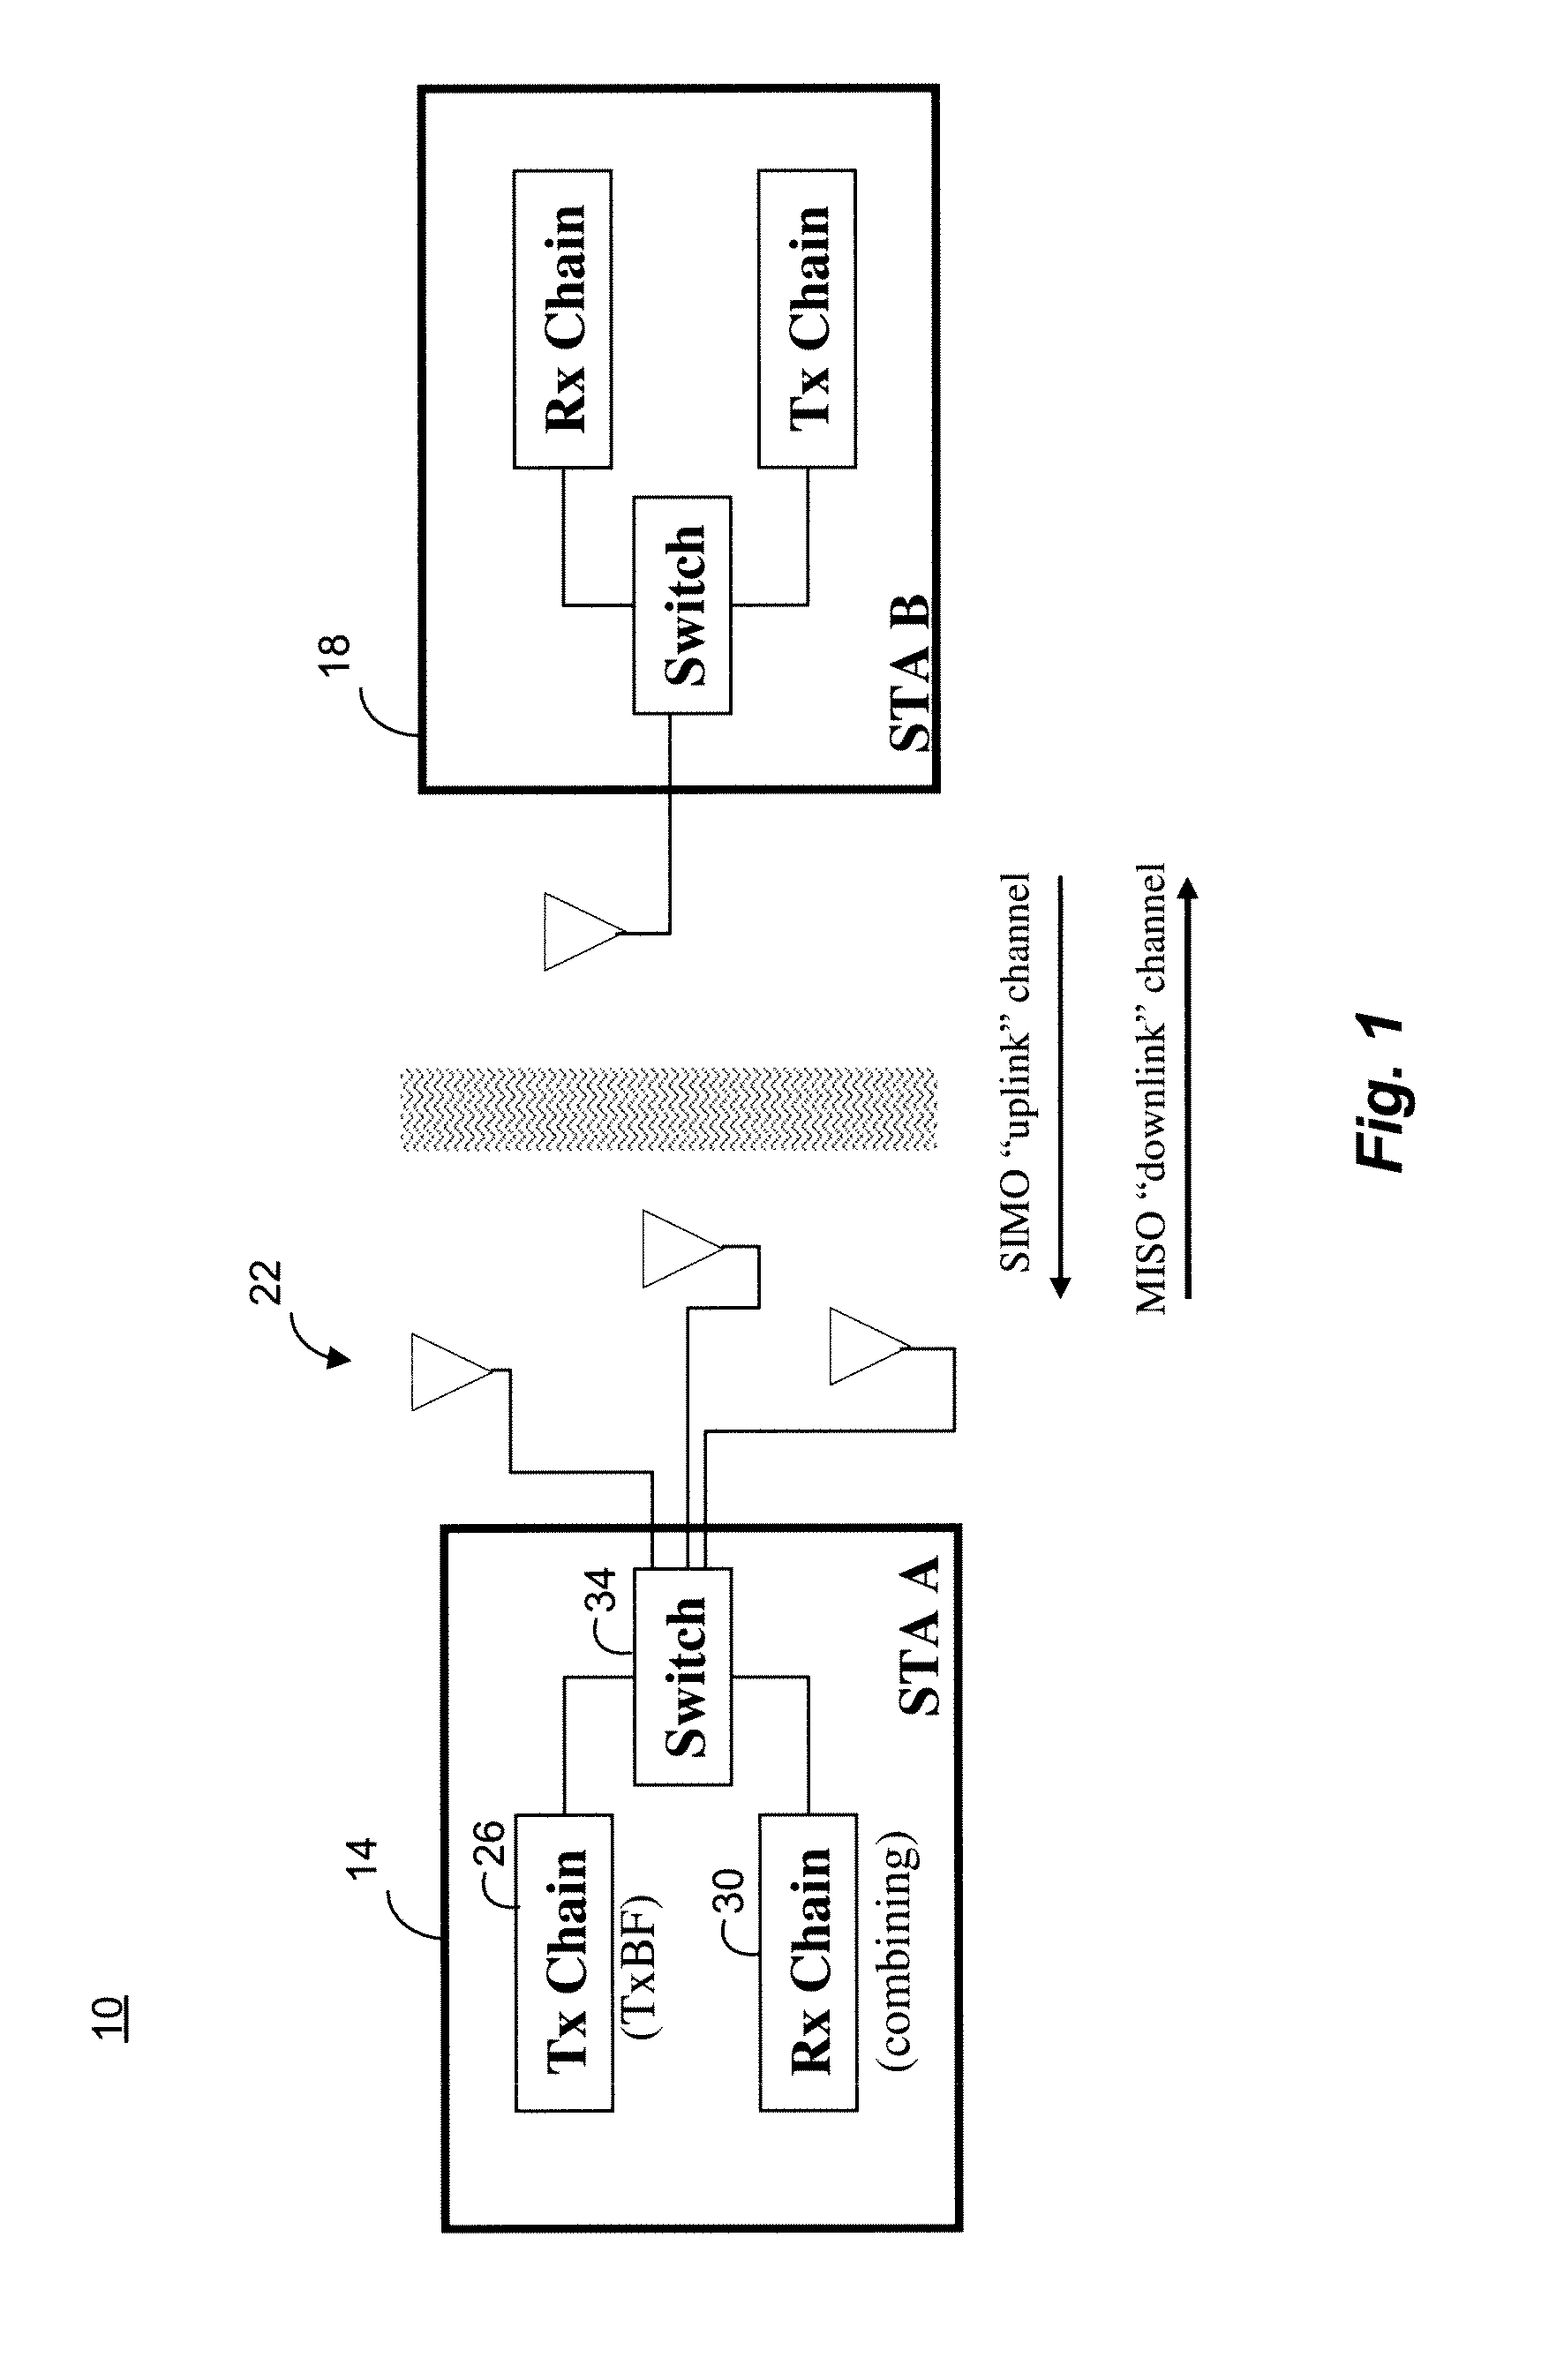 Method and apparatus for transmit beamforming